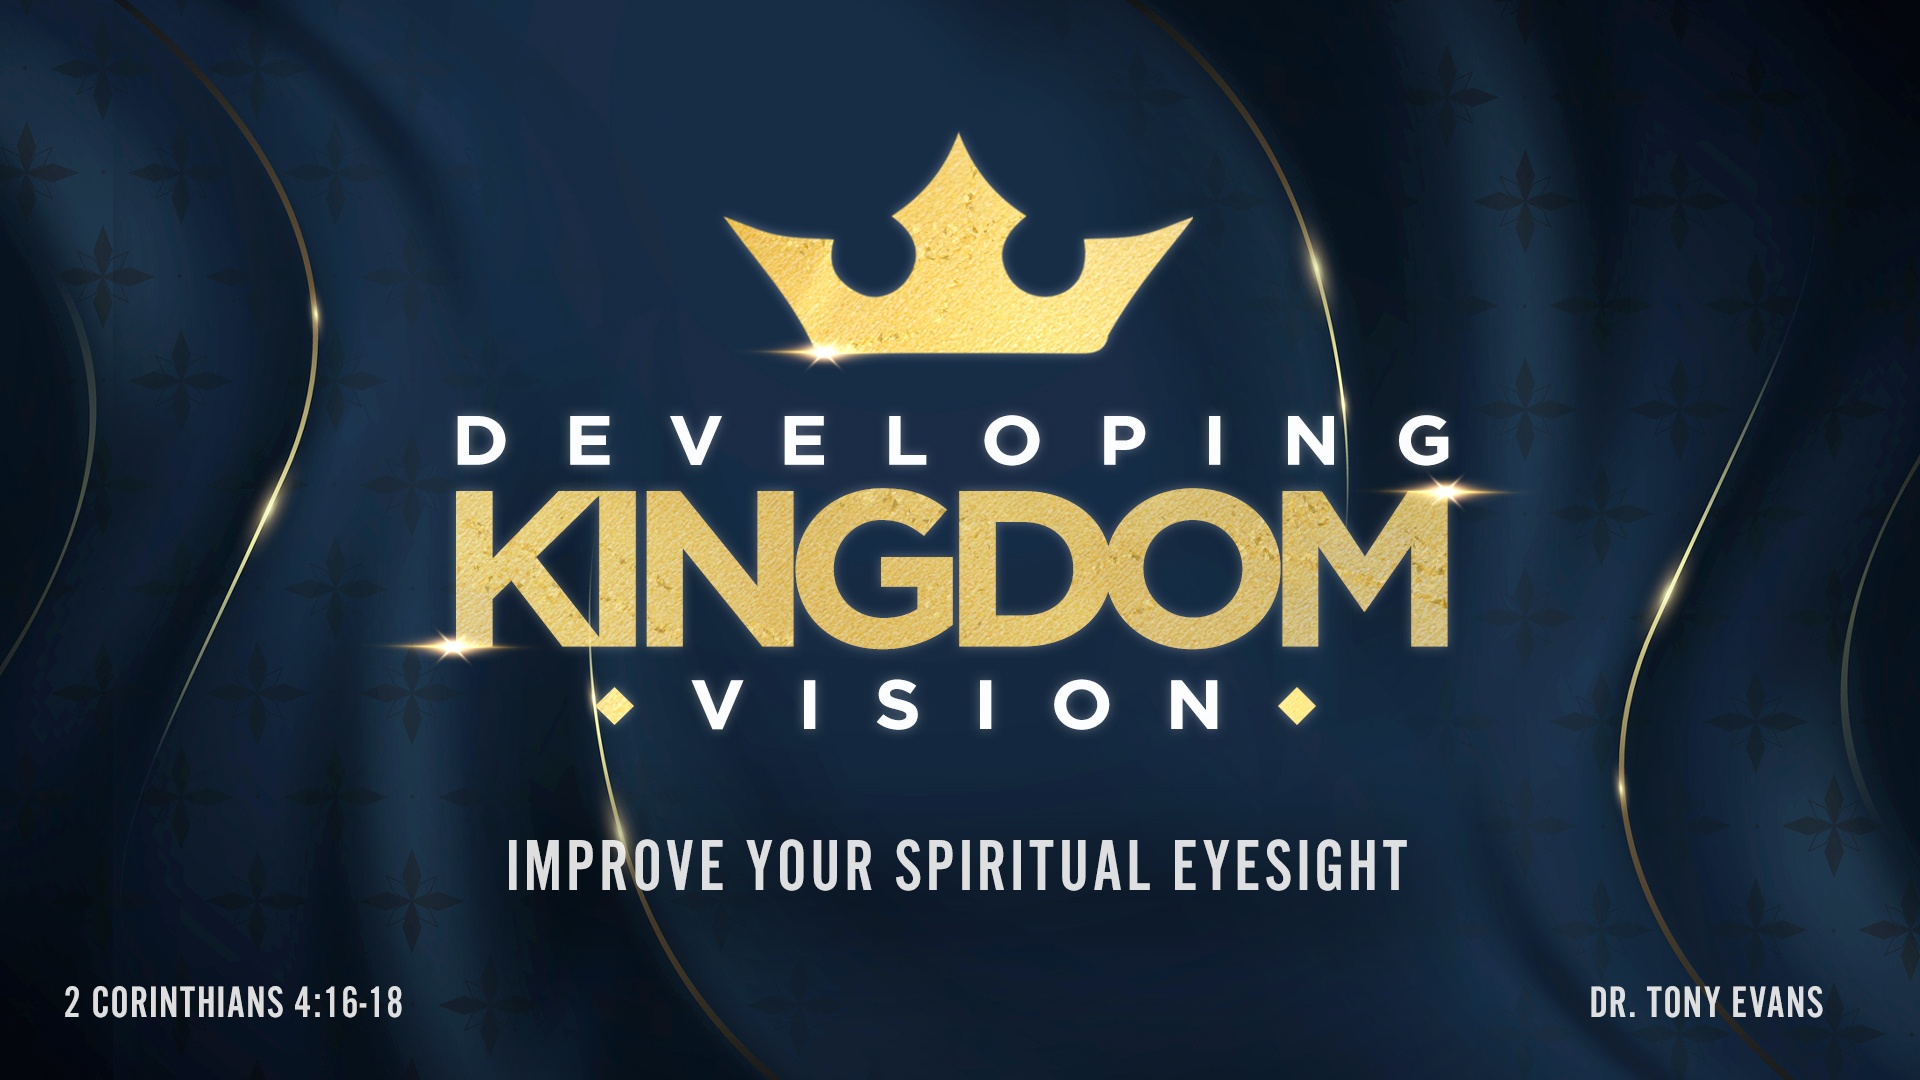 Developing Kingdom Vision Improving Your Spiritual Eyesight by Dr. Tony Evans